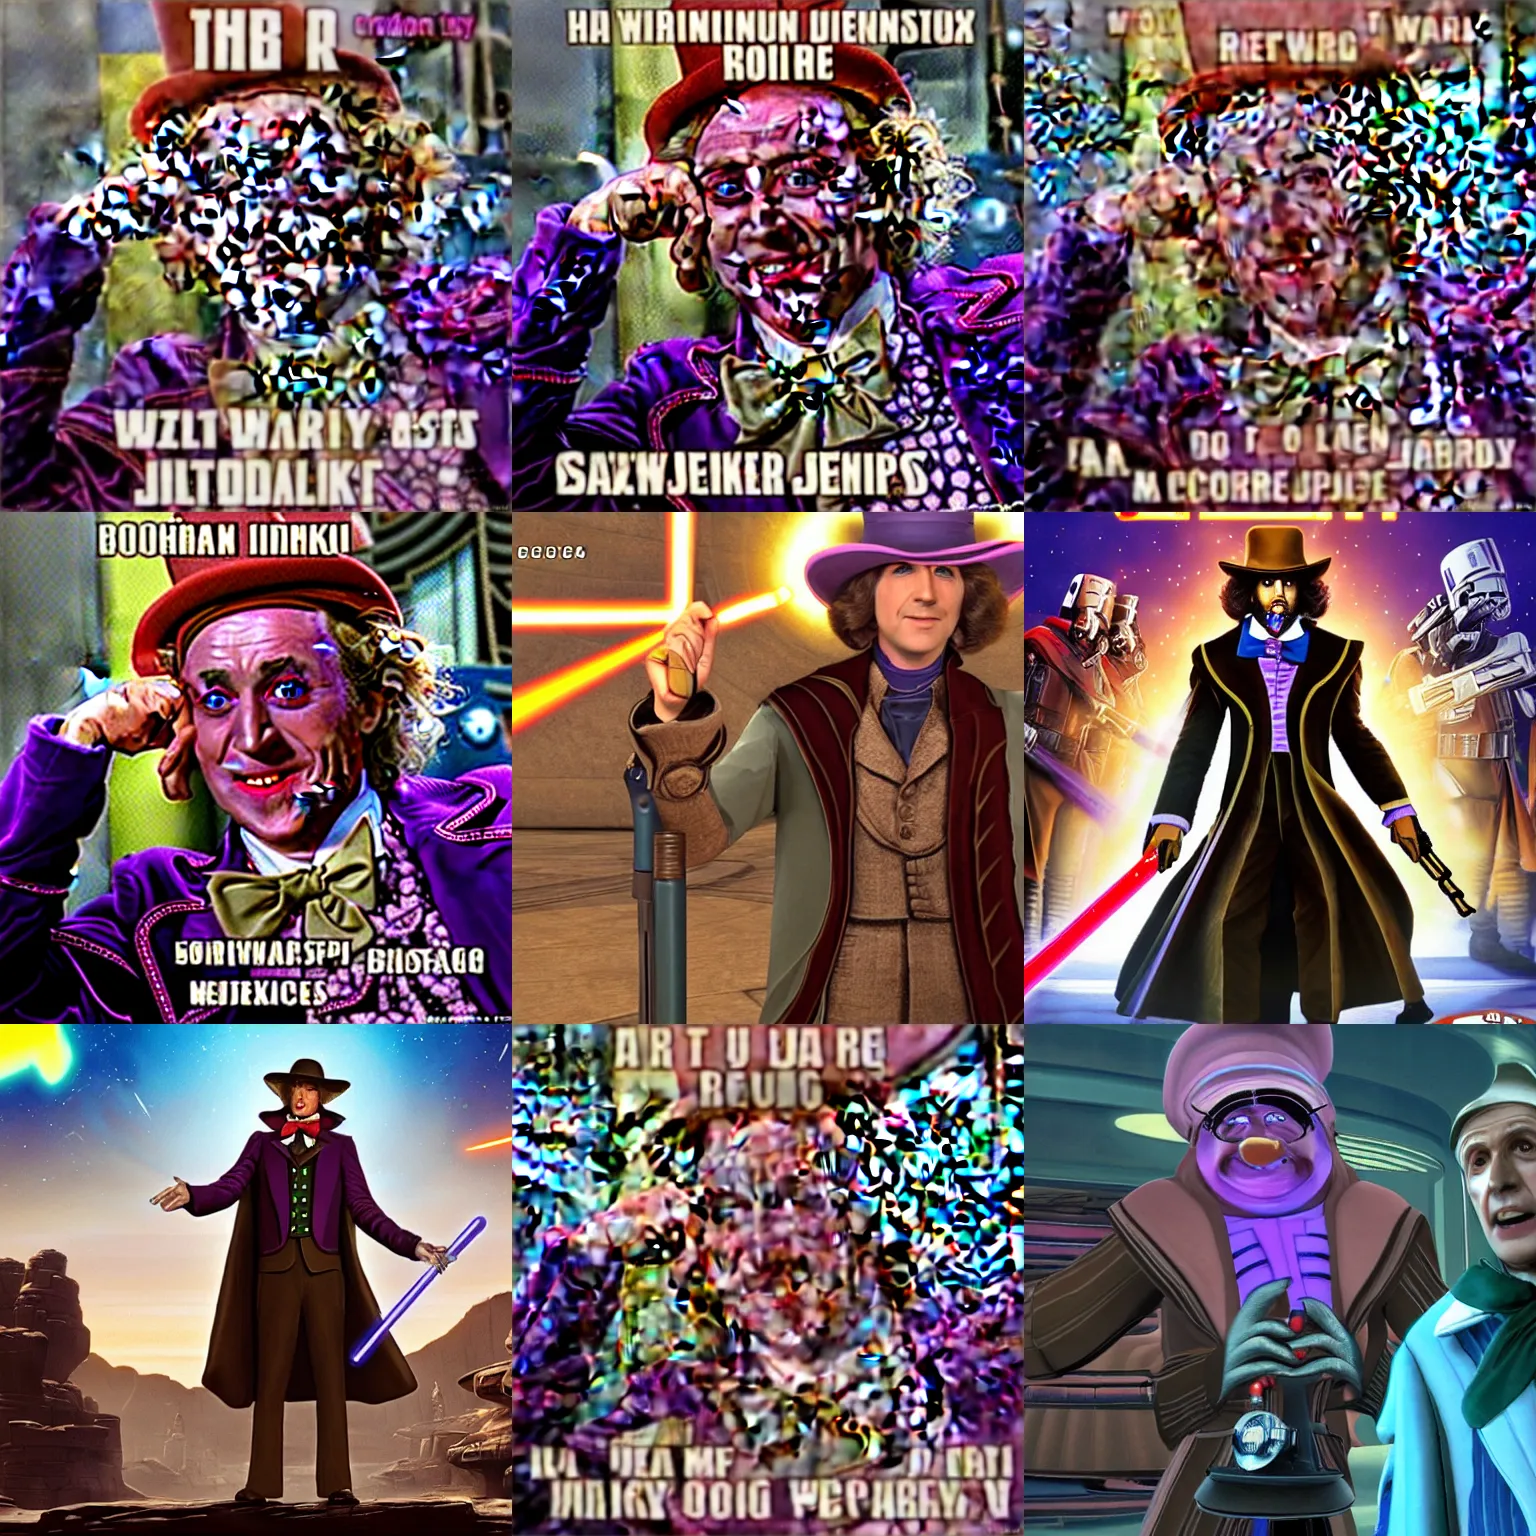 Prompt: Willy Wonka as a Jedi in Starwars the old republic, wearing a brown cloak in a cyberpunk city